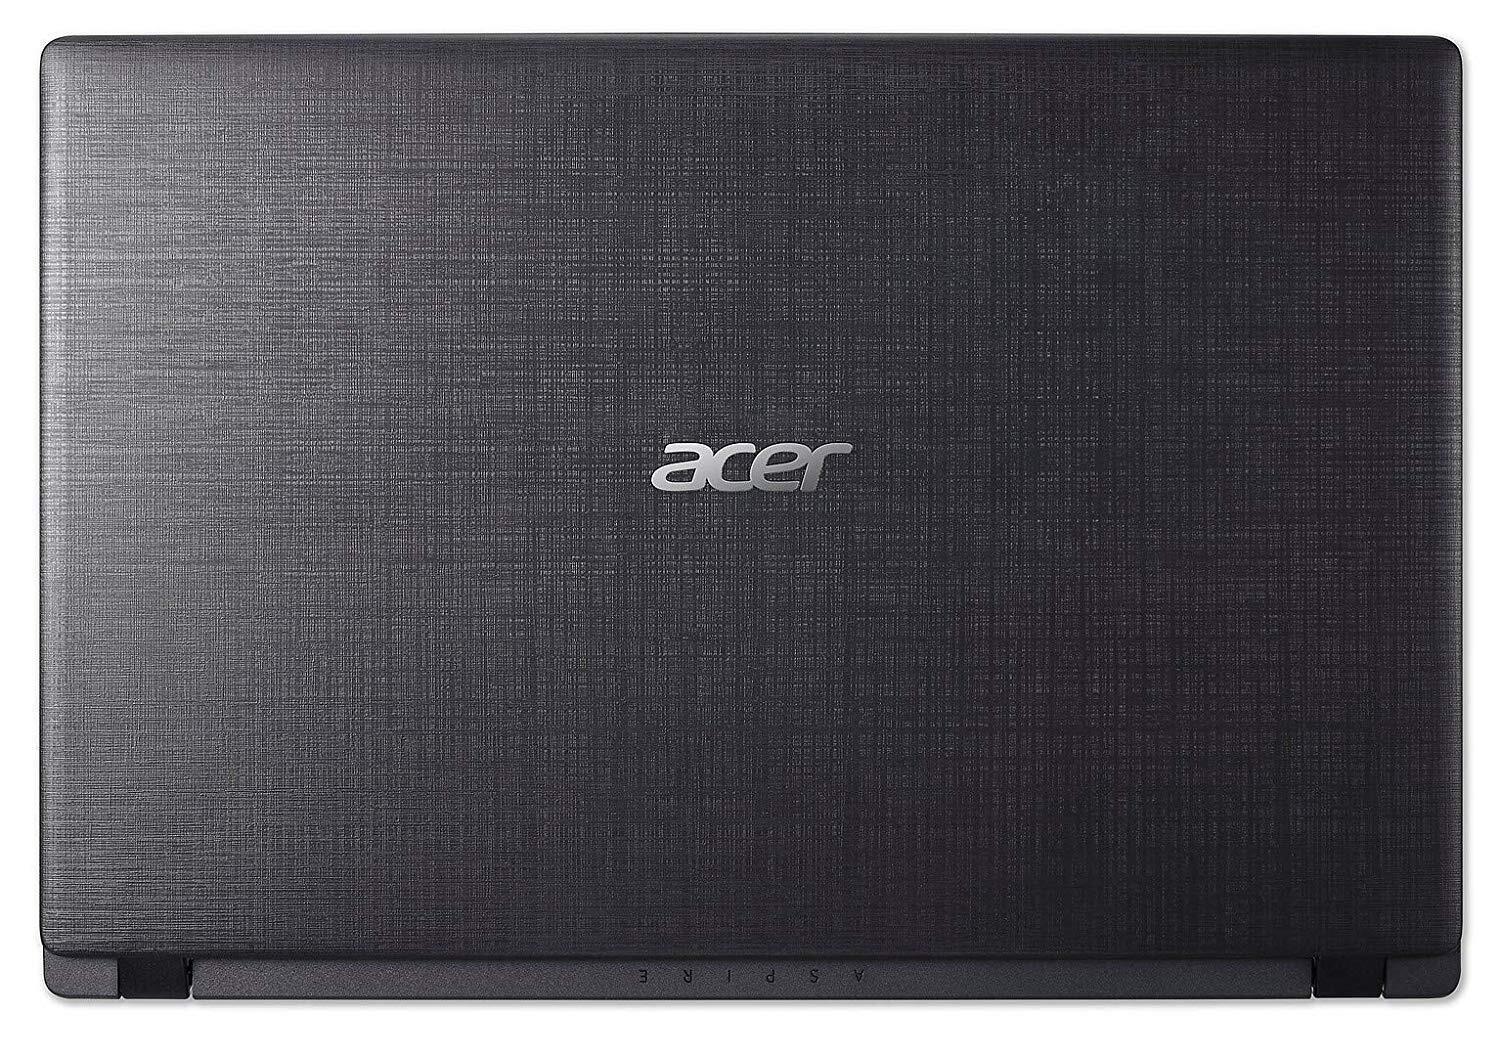 Acer One 14 Z2-485 14-inch Laptop (Intel Pentium Gold Processor) 4415U/4GB/1TB HDD/Windows 10 Home Single Language 64 Bit with Intel HD 610 Graphics 3 Years Warranty Silver-M000000000475 www.mysocially.com